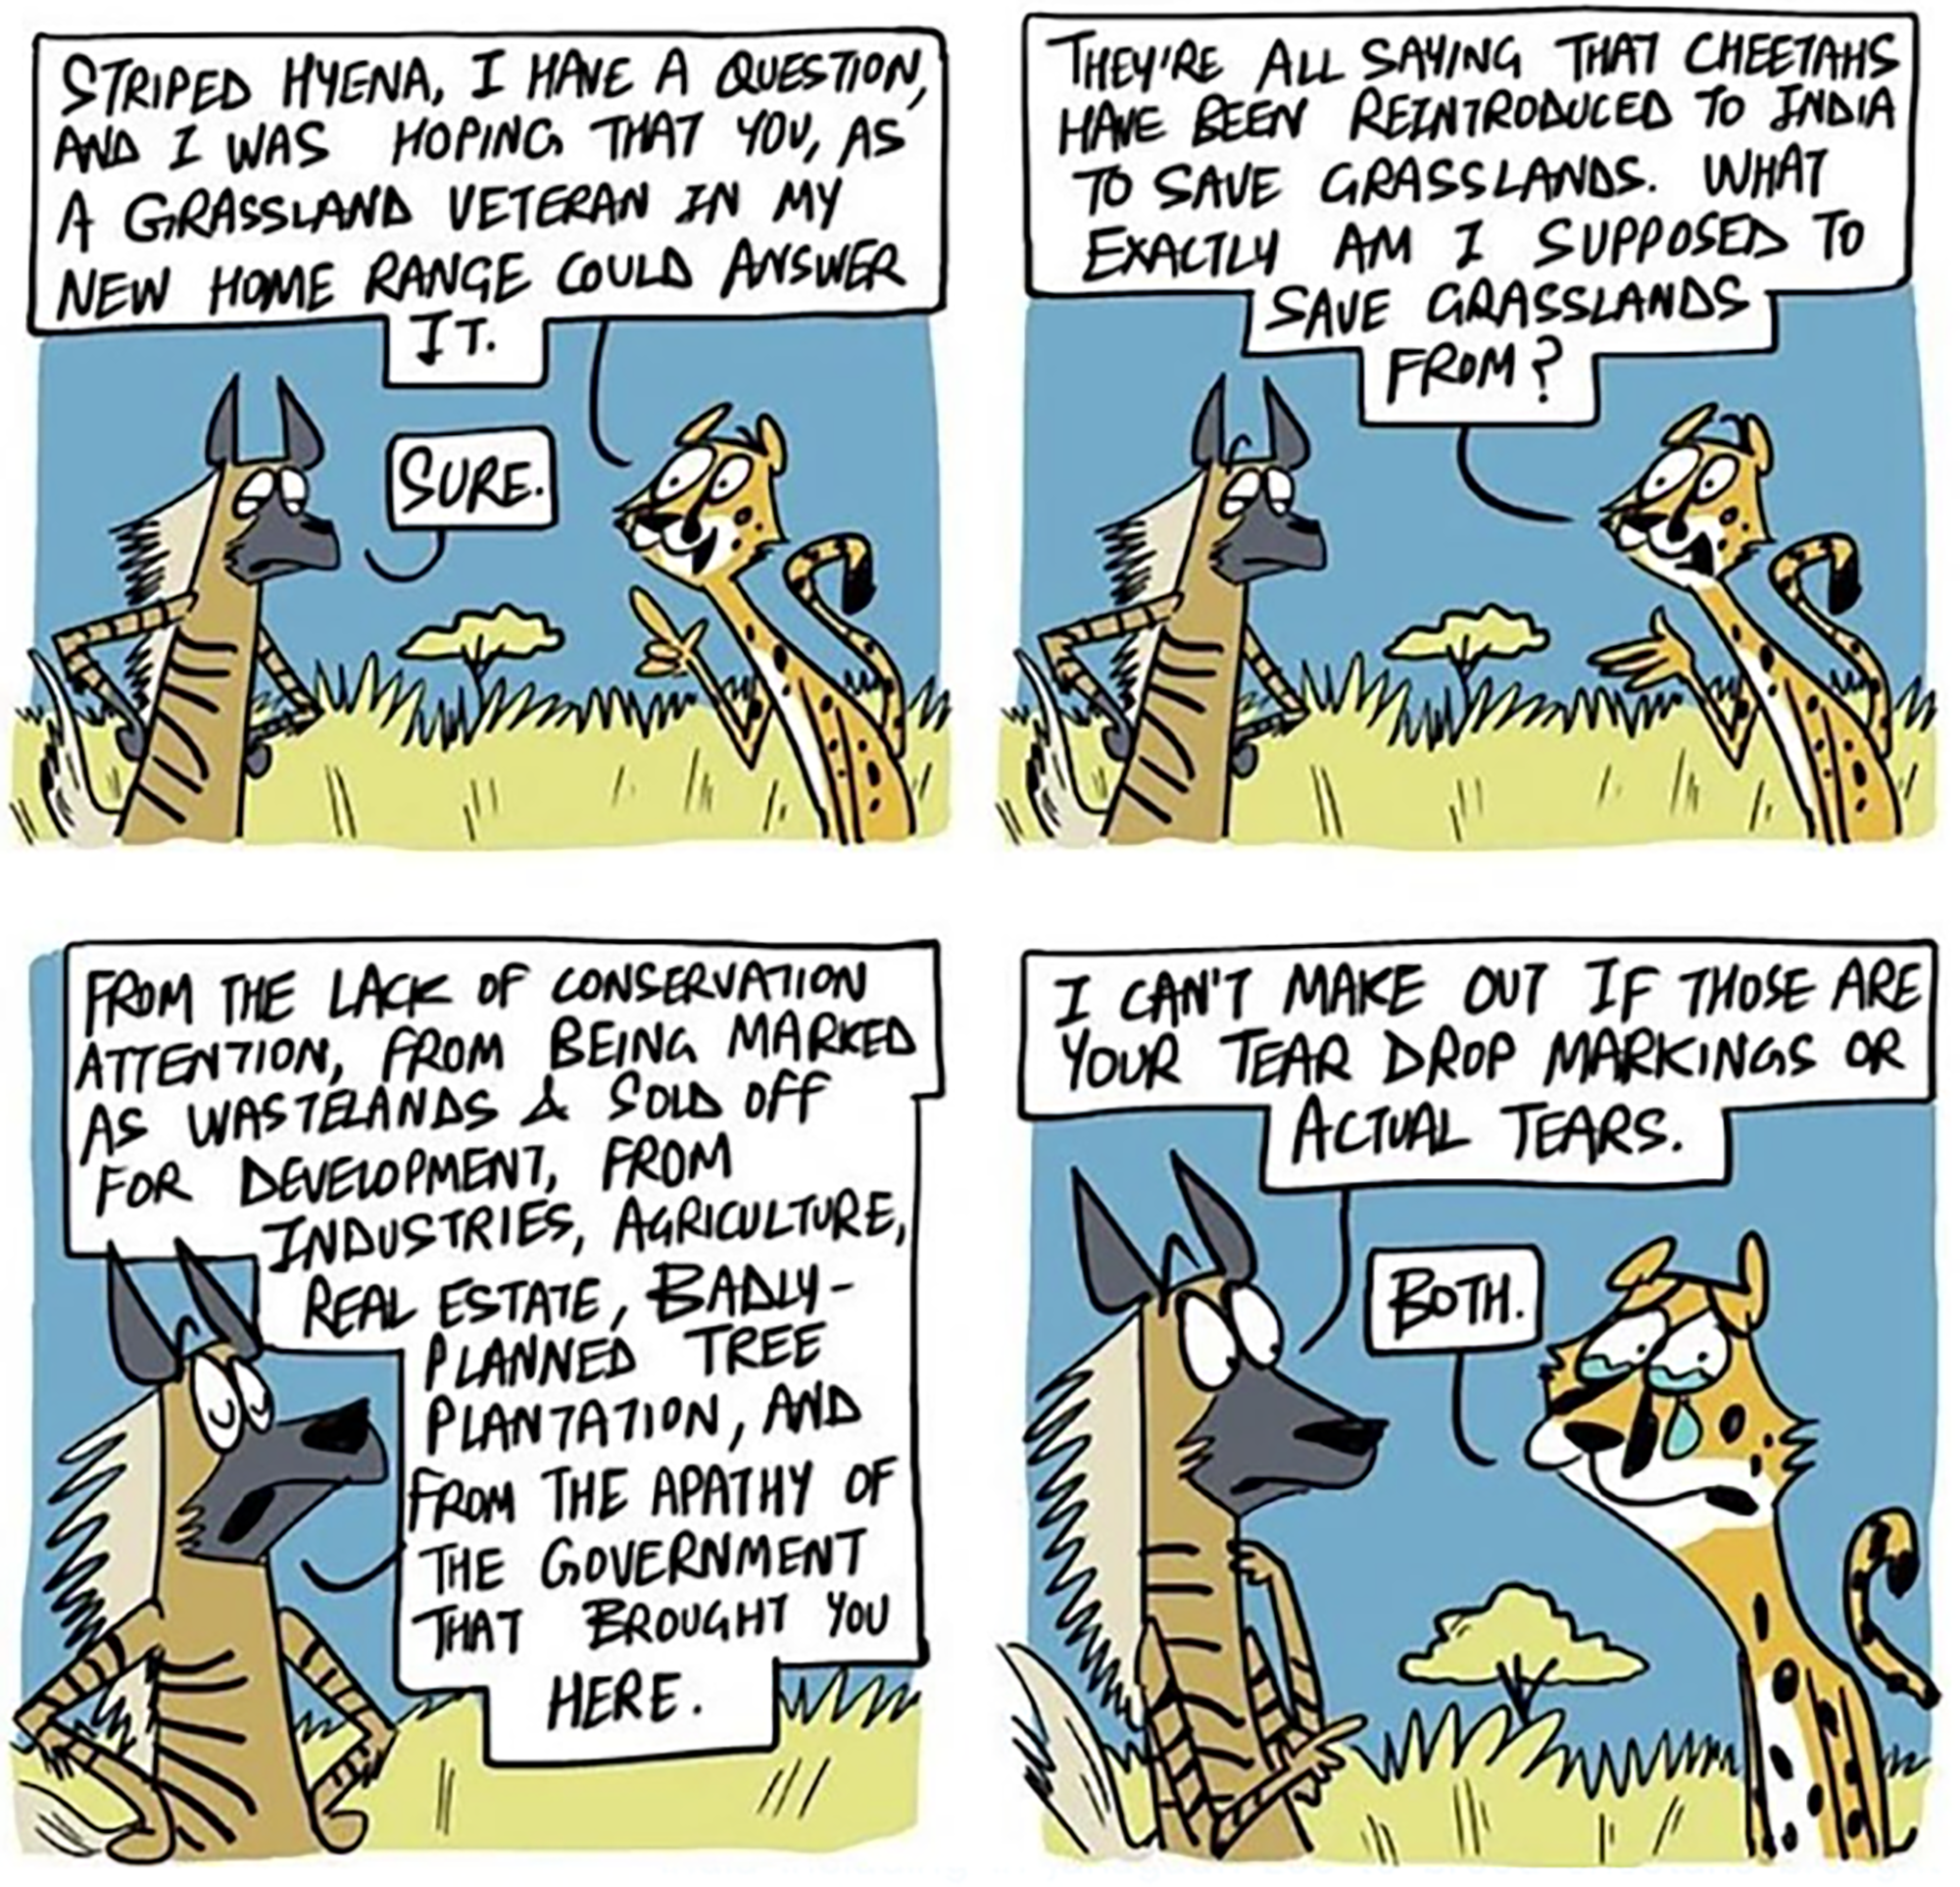 India News cartoon, cheetahs